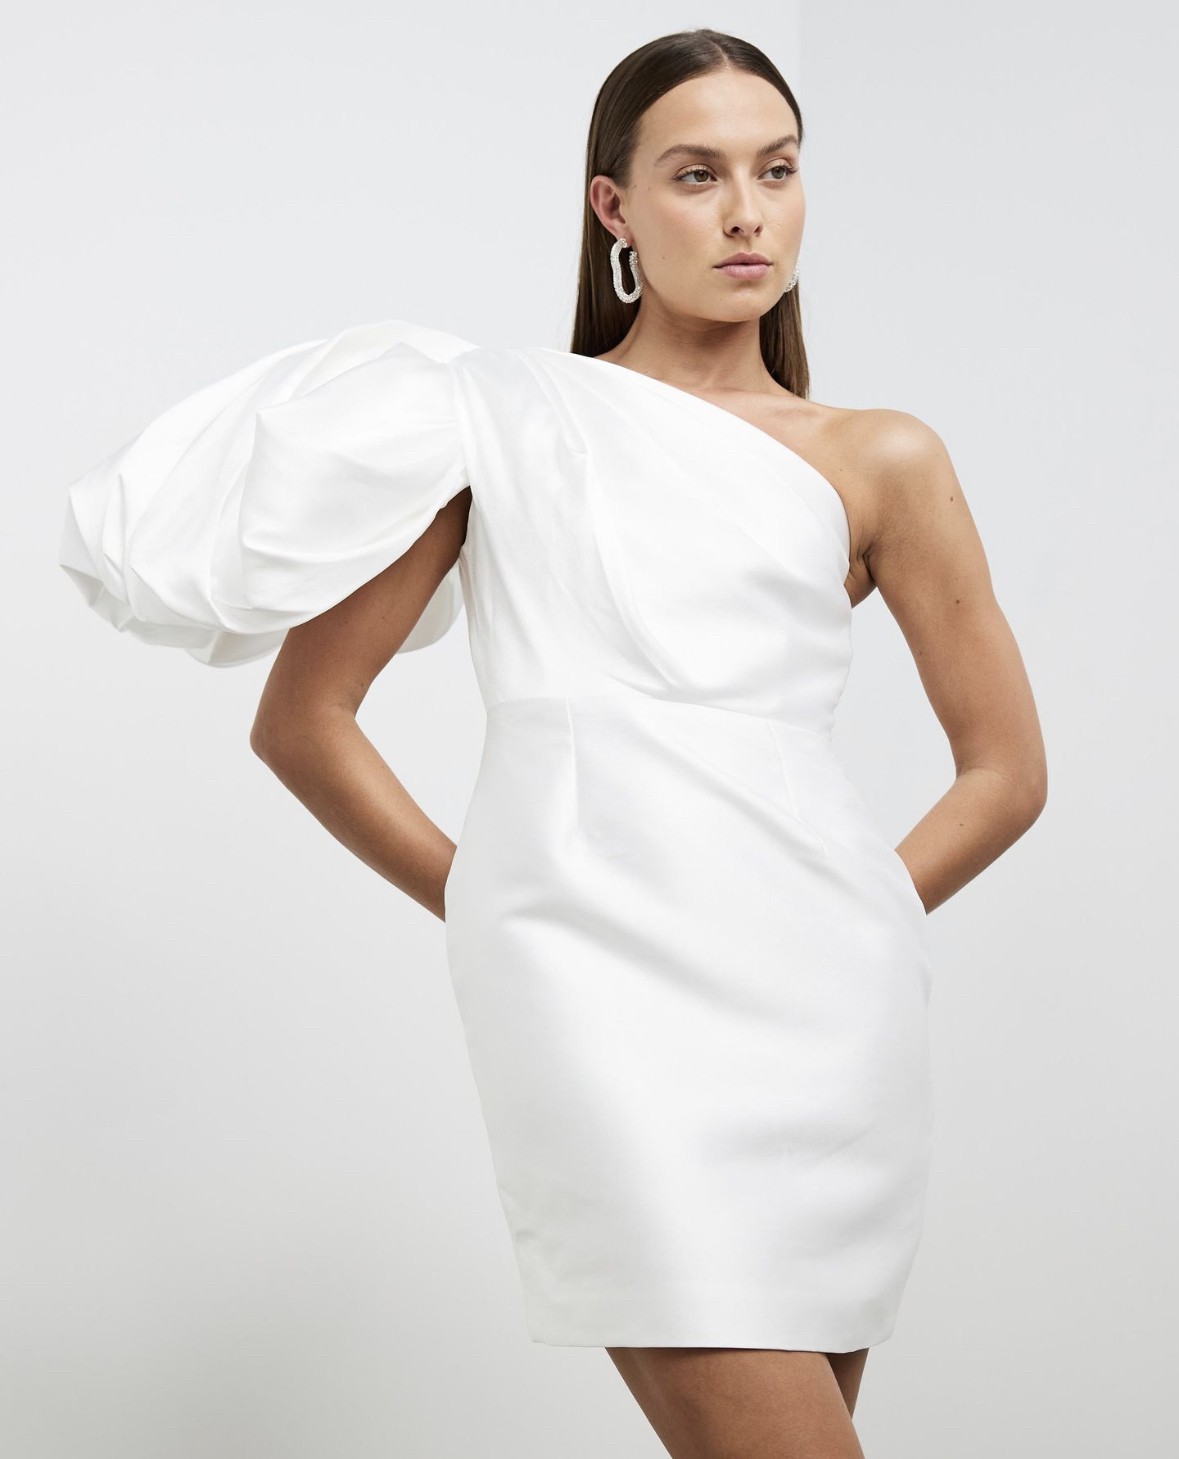 Solace London Hayes Mini Dress New Wedding Dress Save 31% - Stillwhite